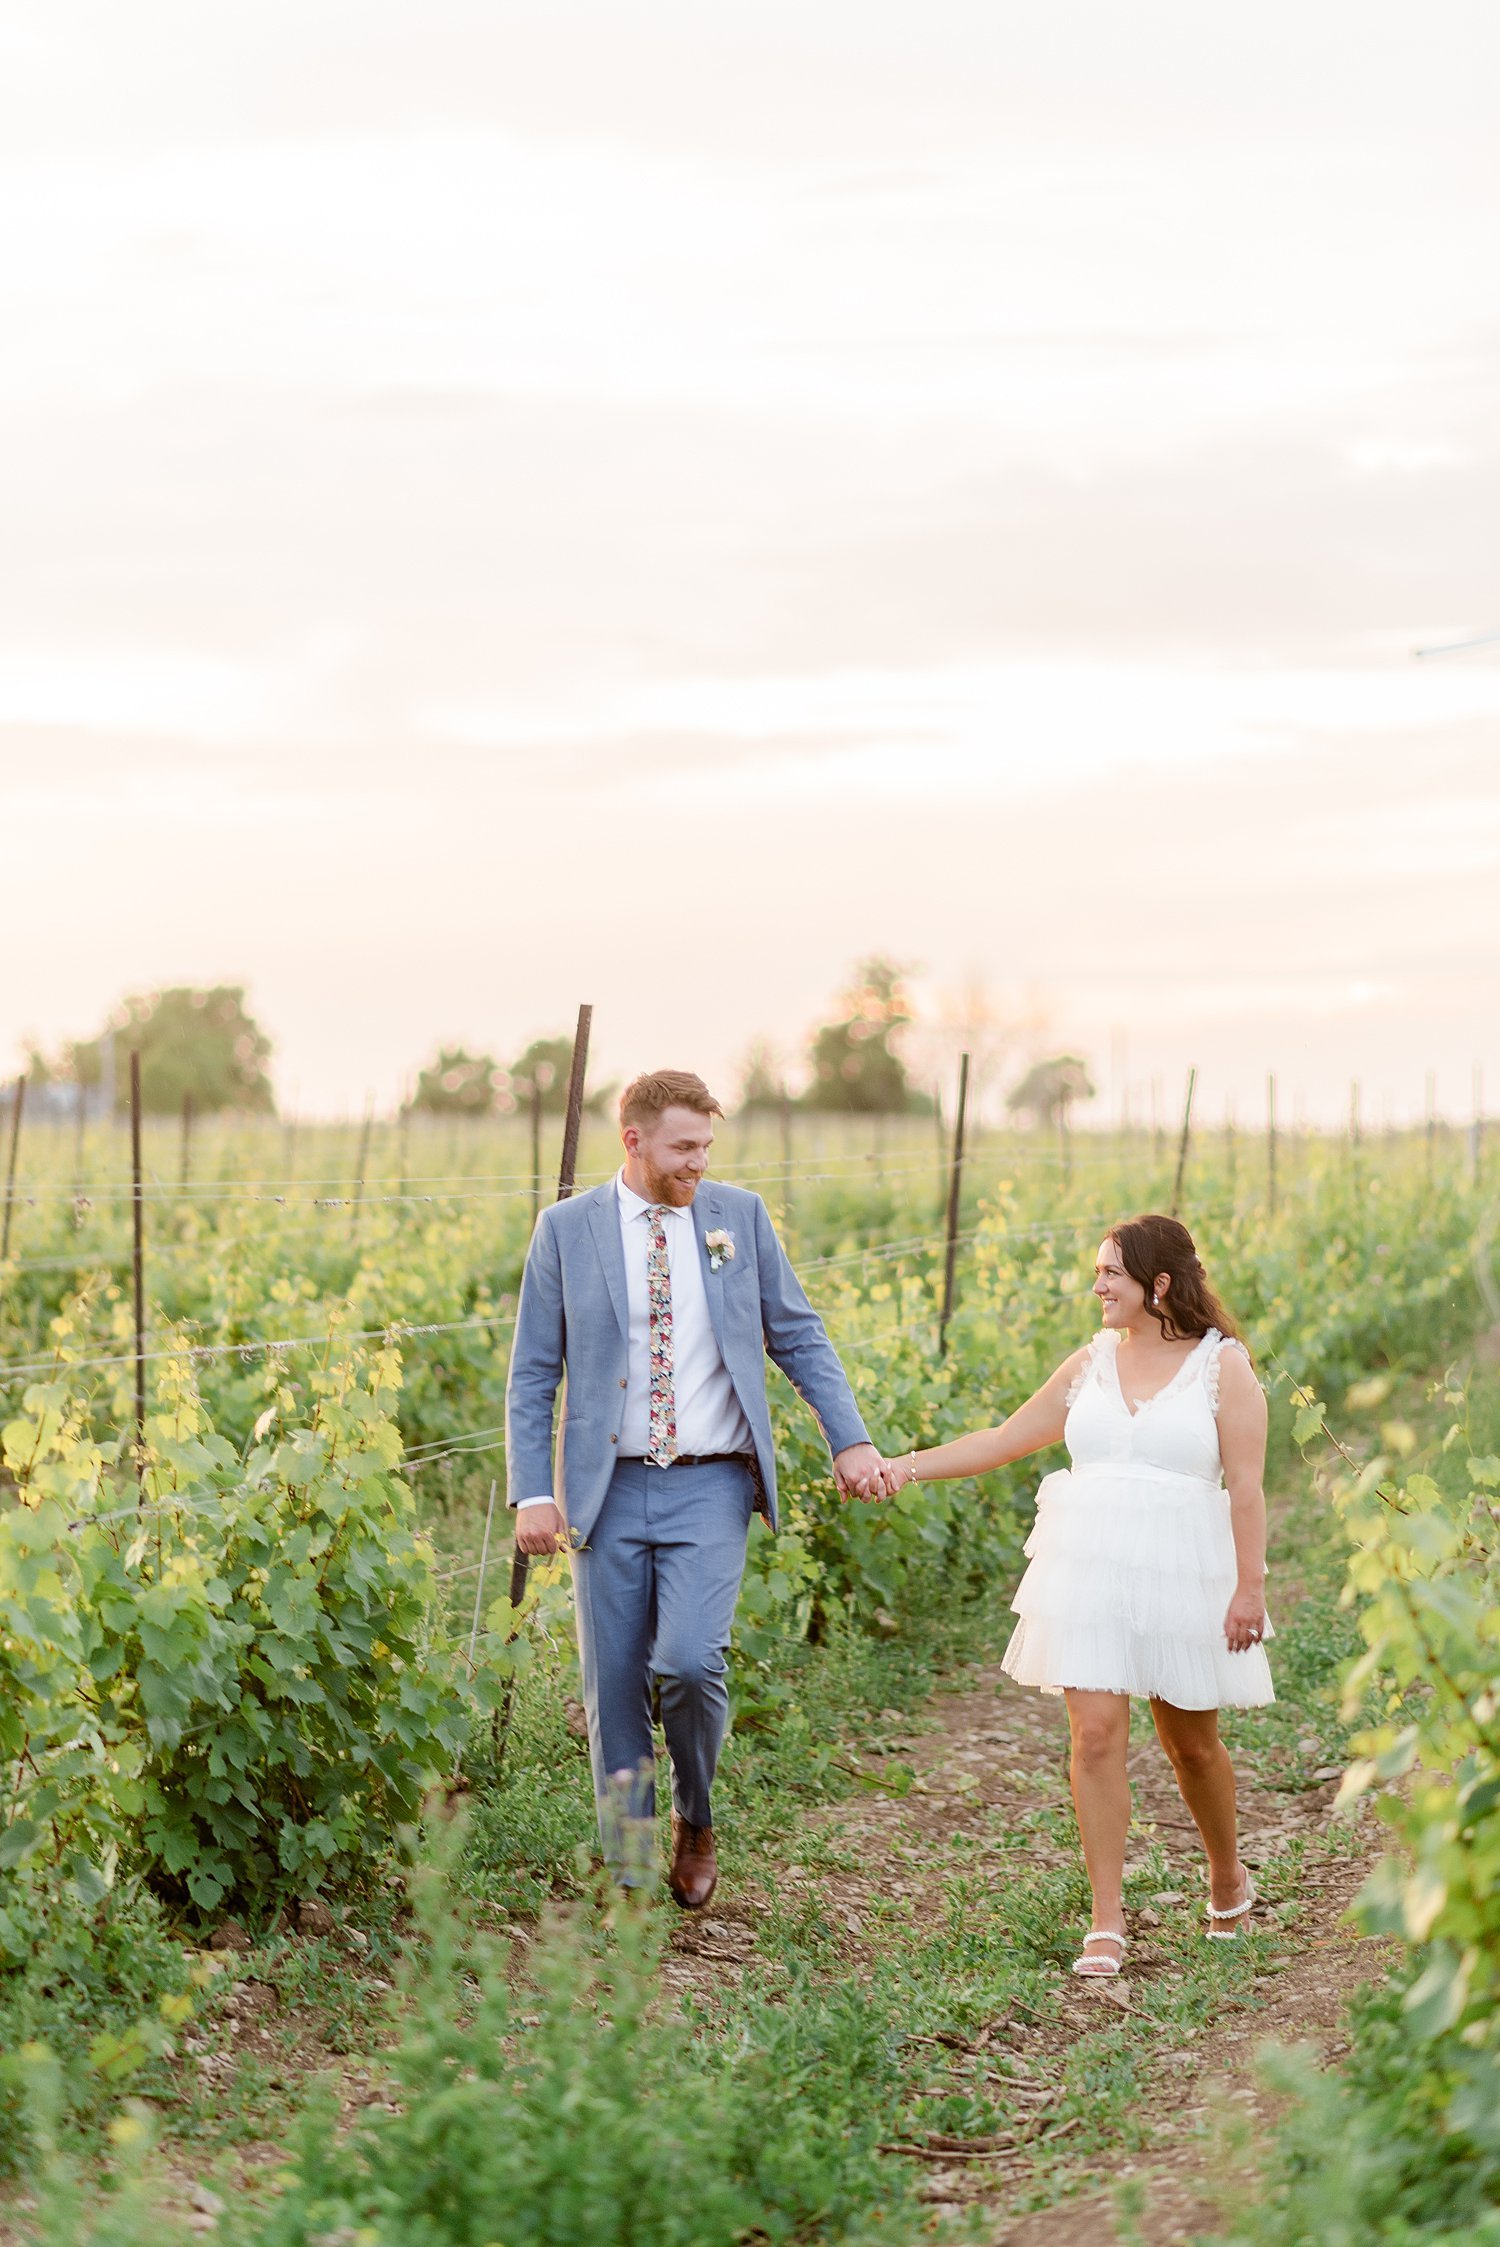 Casa Dea Winery Wedding in Prince Edward County | Prince Edward County Wedding Photographer | Holly McMurter Photographs_0124.jpg